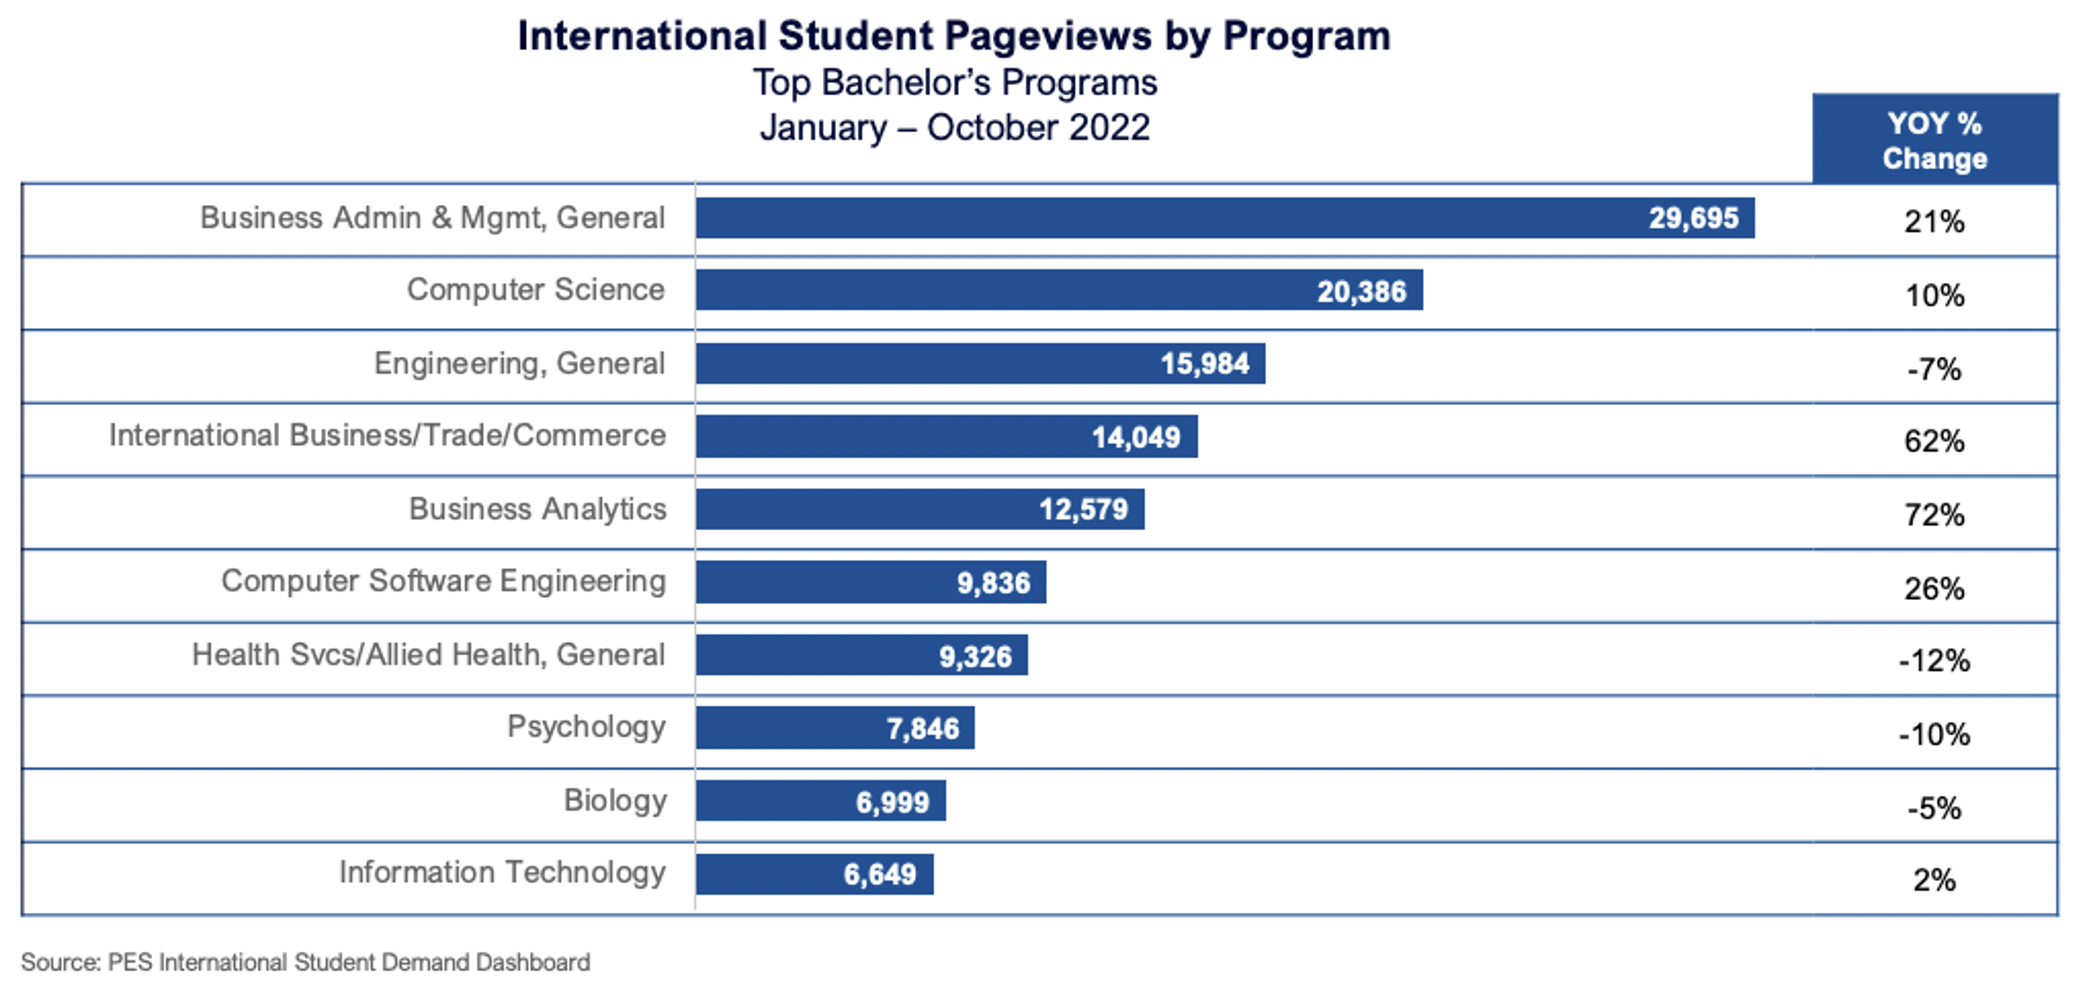 International student pageviews by program